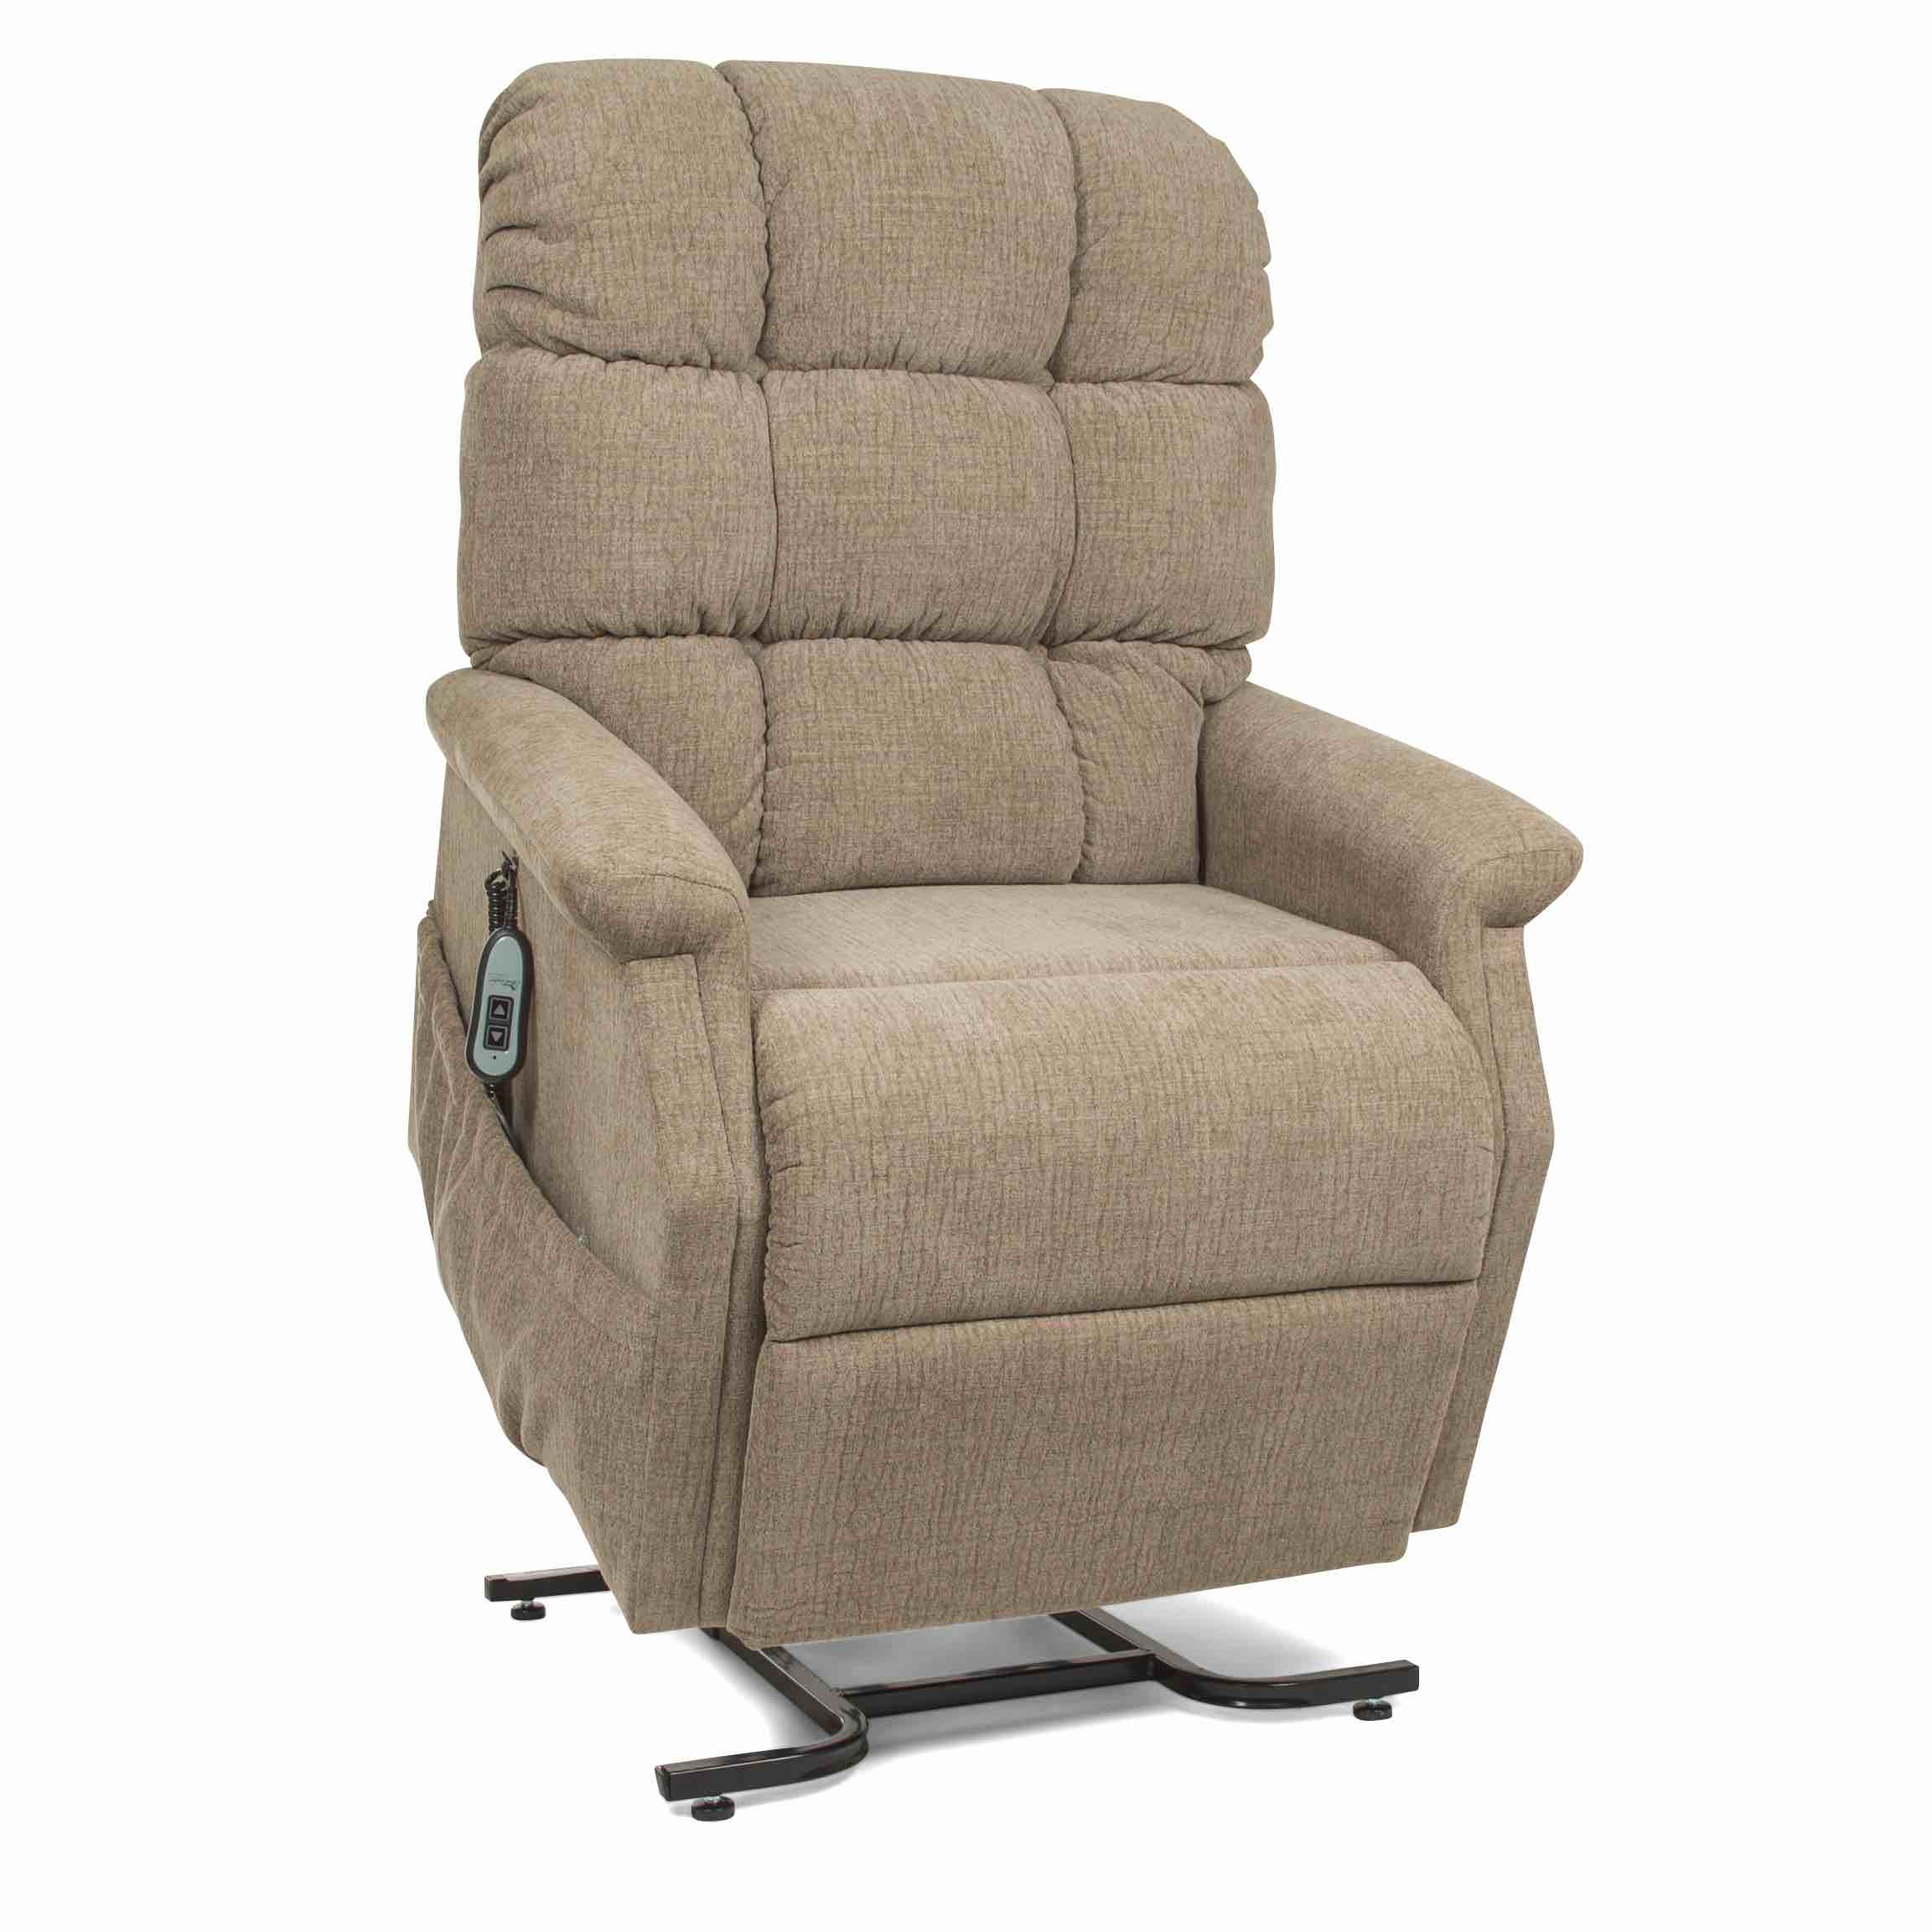 Aurora lift chair power recliner - brown color